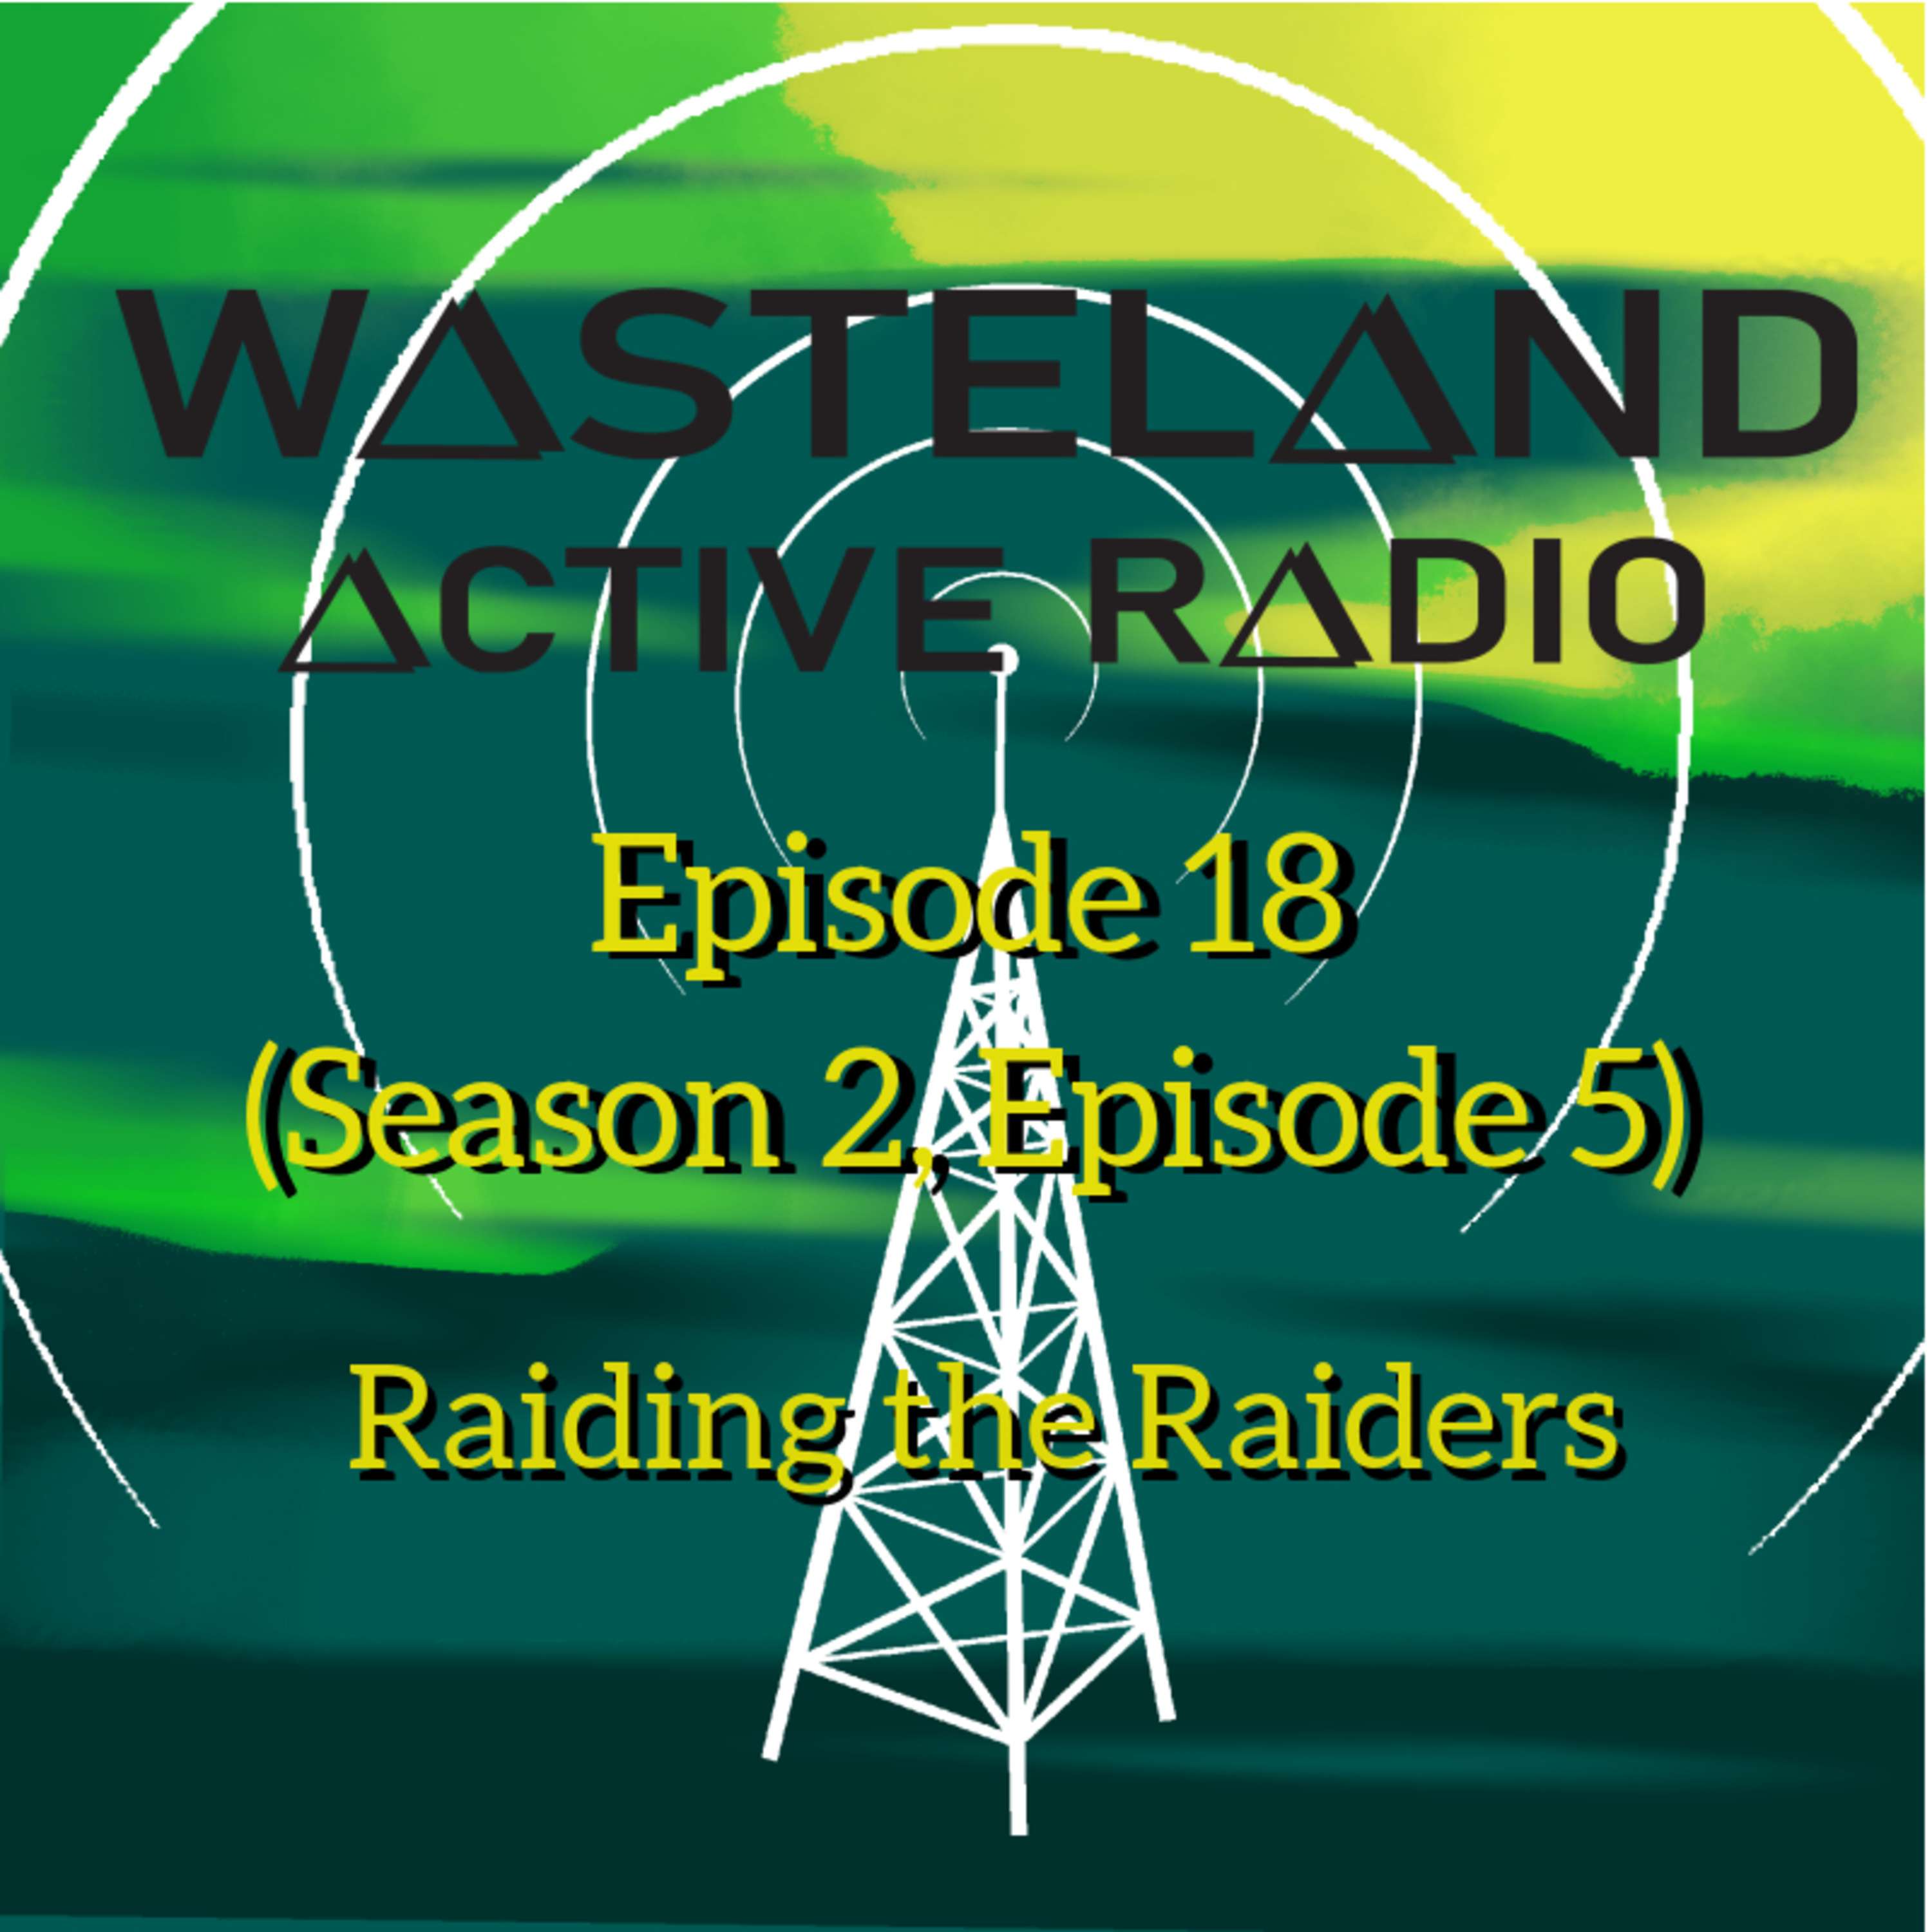 Episode 18: Raiding the Raiders